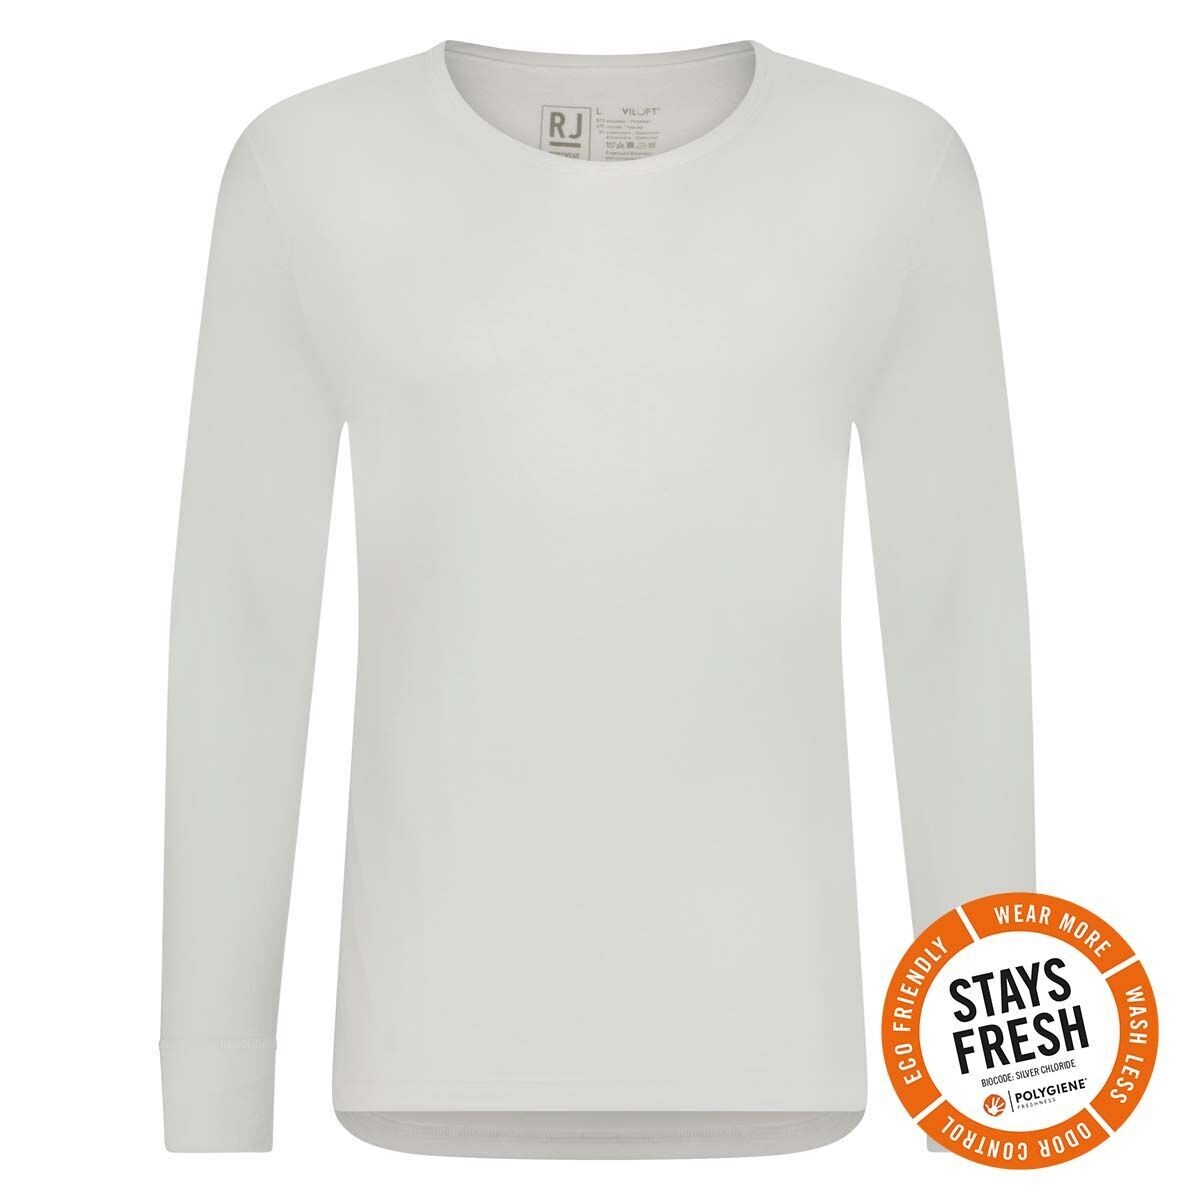 RJ Bodywear Thermo shirt Mayrhofen, Size: L